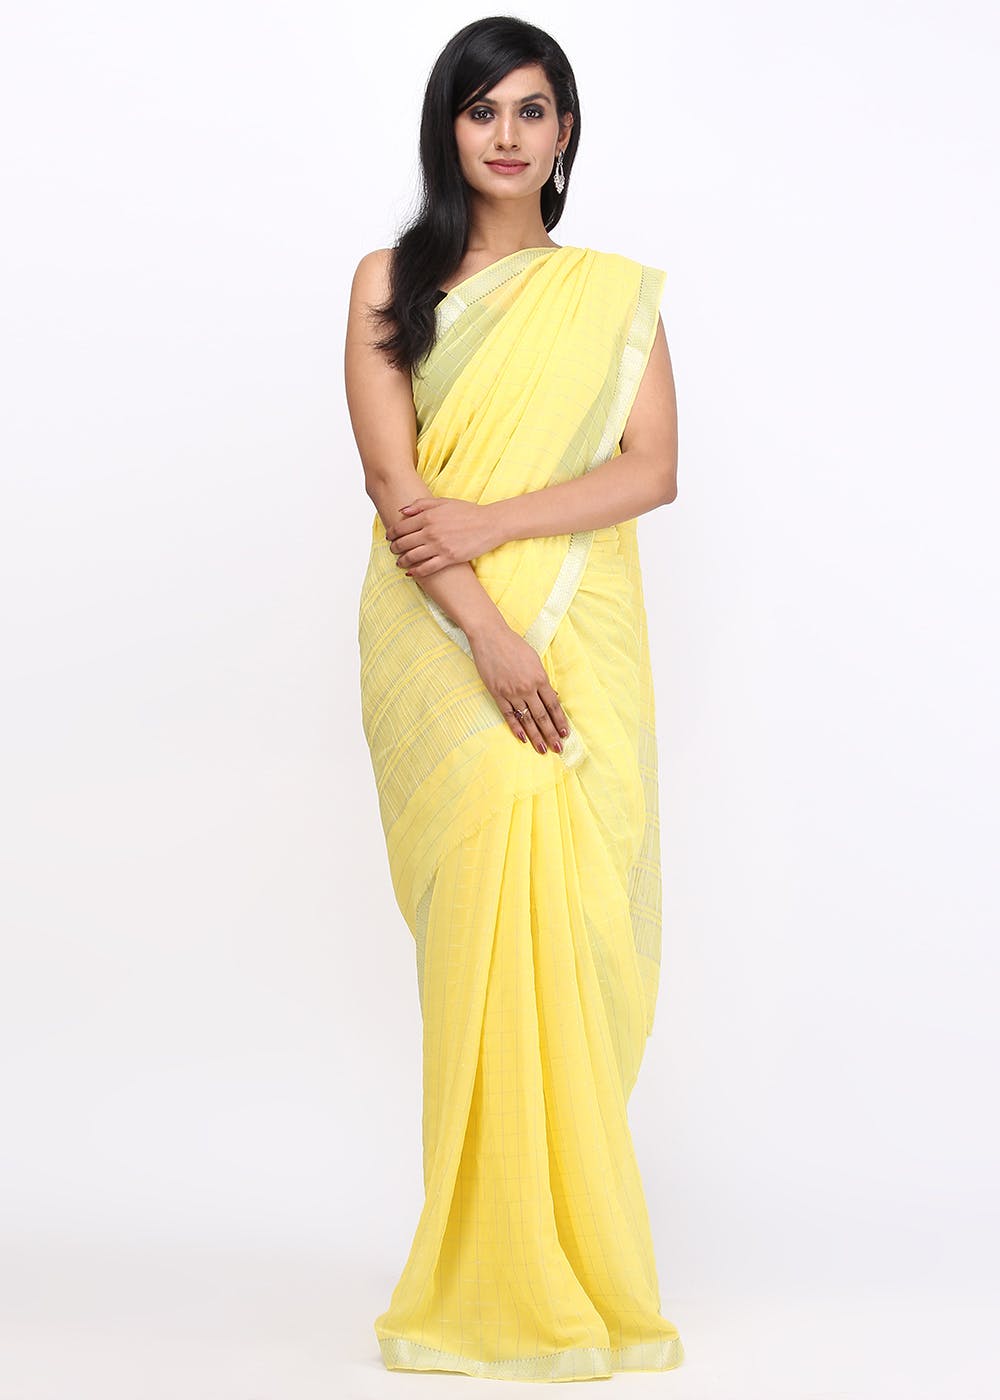 INDIAN PURE CHIFFON FABRIC SAREE WOMEN FOR WEDDING WEAR DRESS LADIES SARI  BLOUSE | eBay